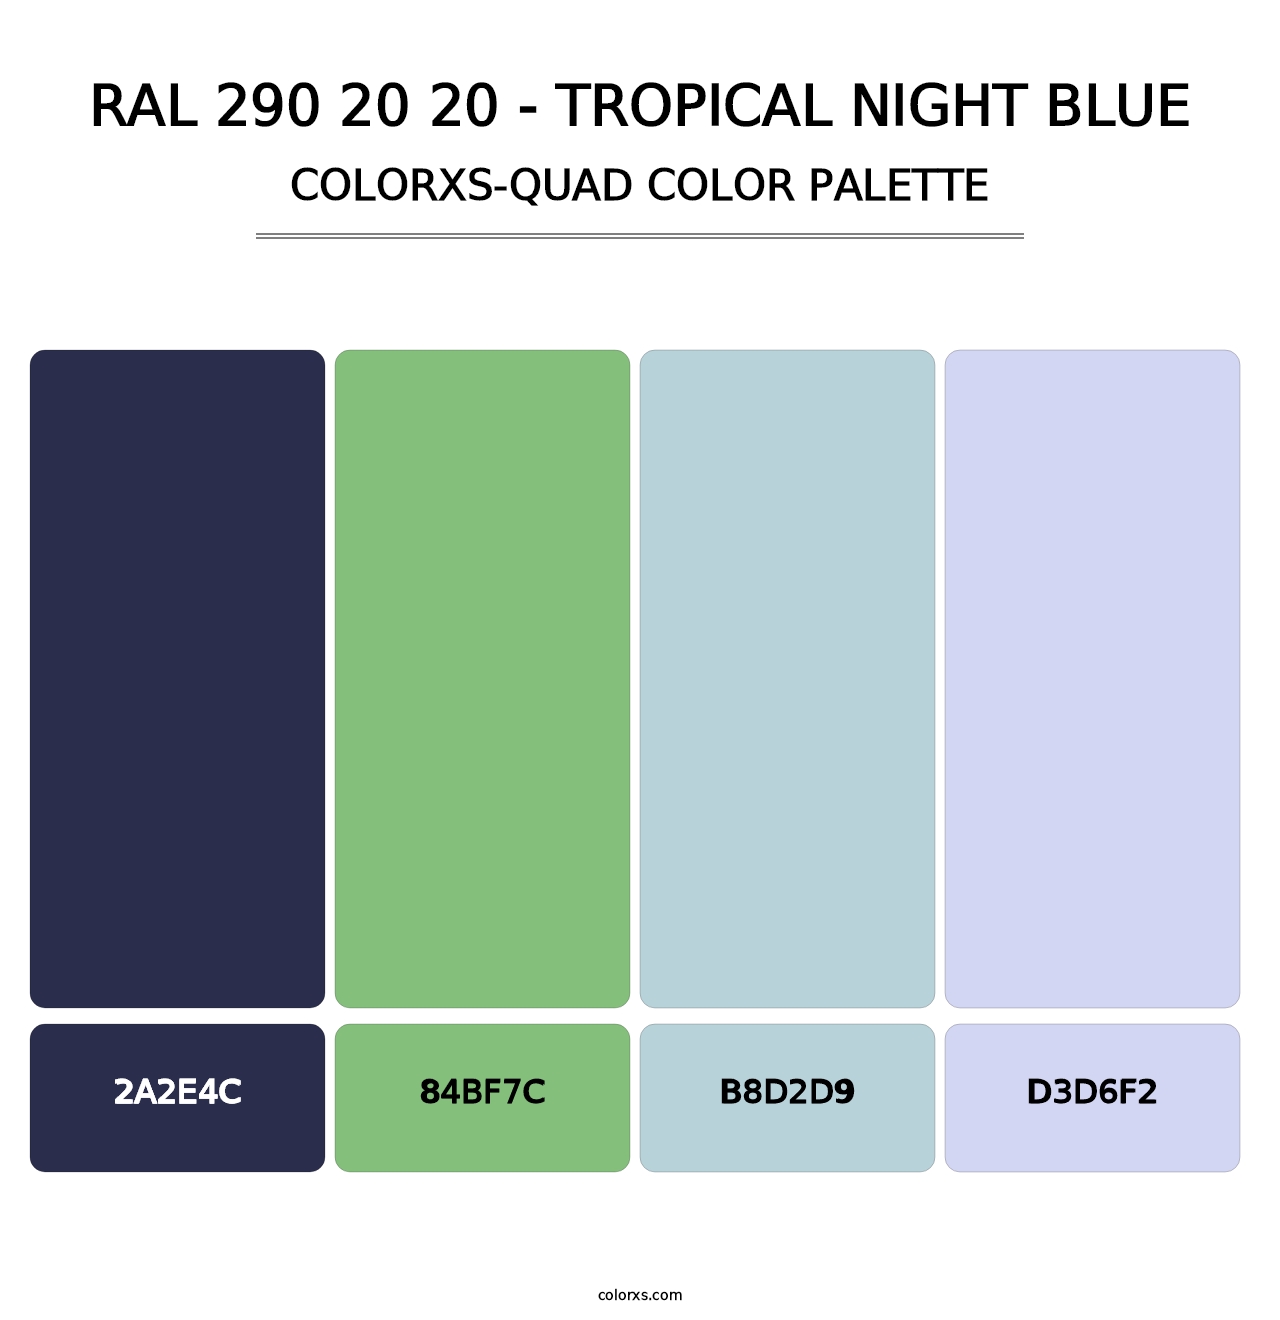 RAL 290 20 20 - Tropical Night Blue - Colorxs Quad Palette